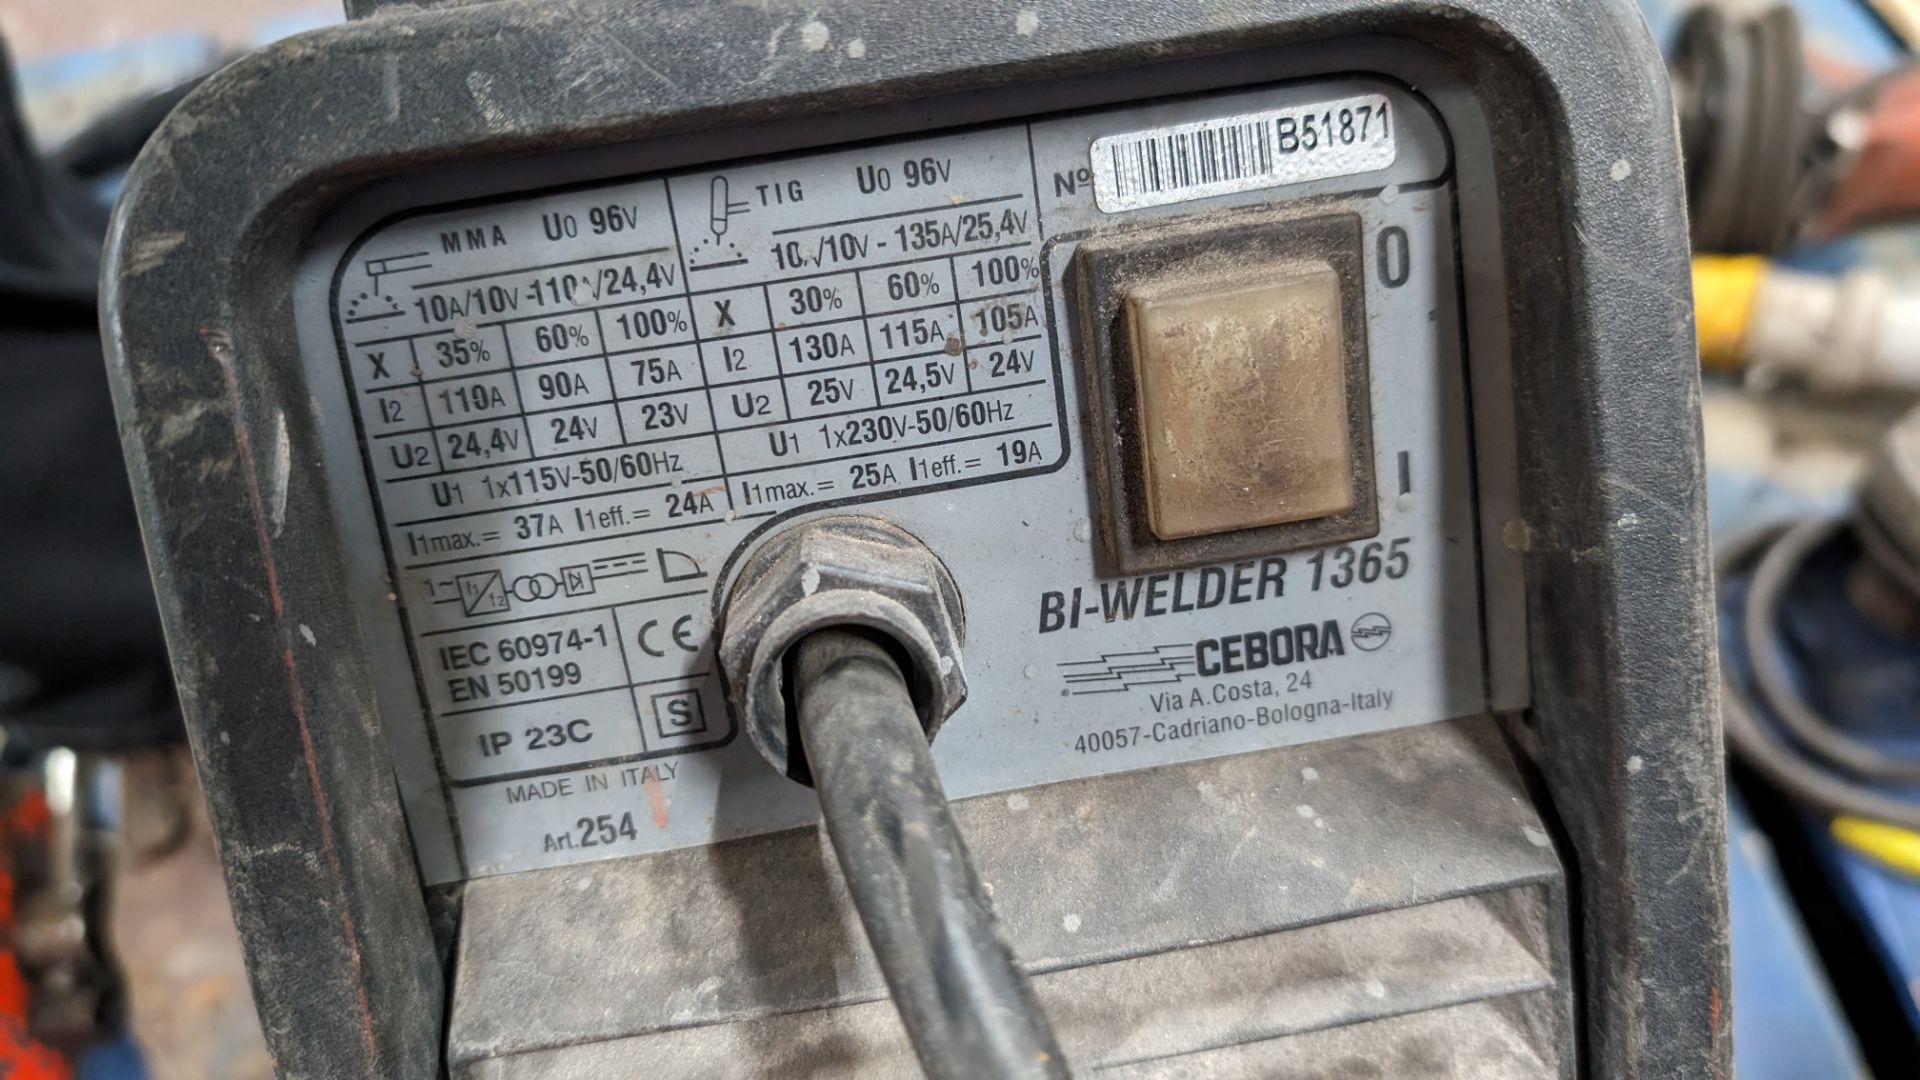 Cebora inverter bi-welder 1365 - Image 4 of 6